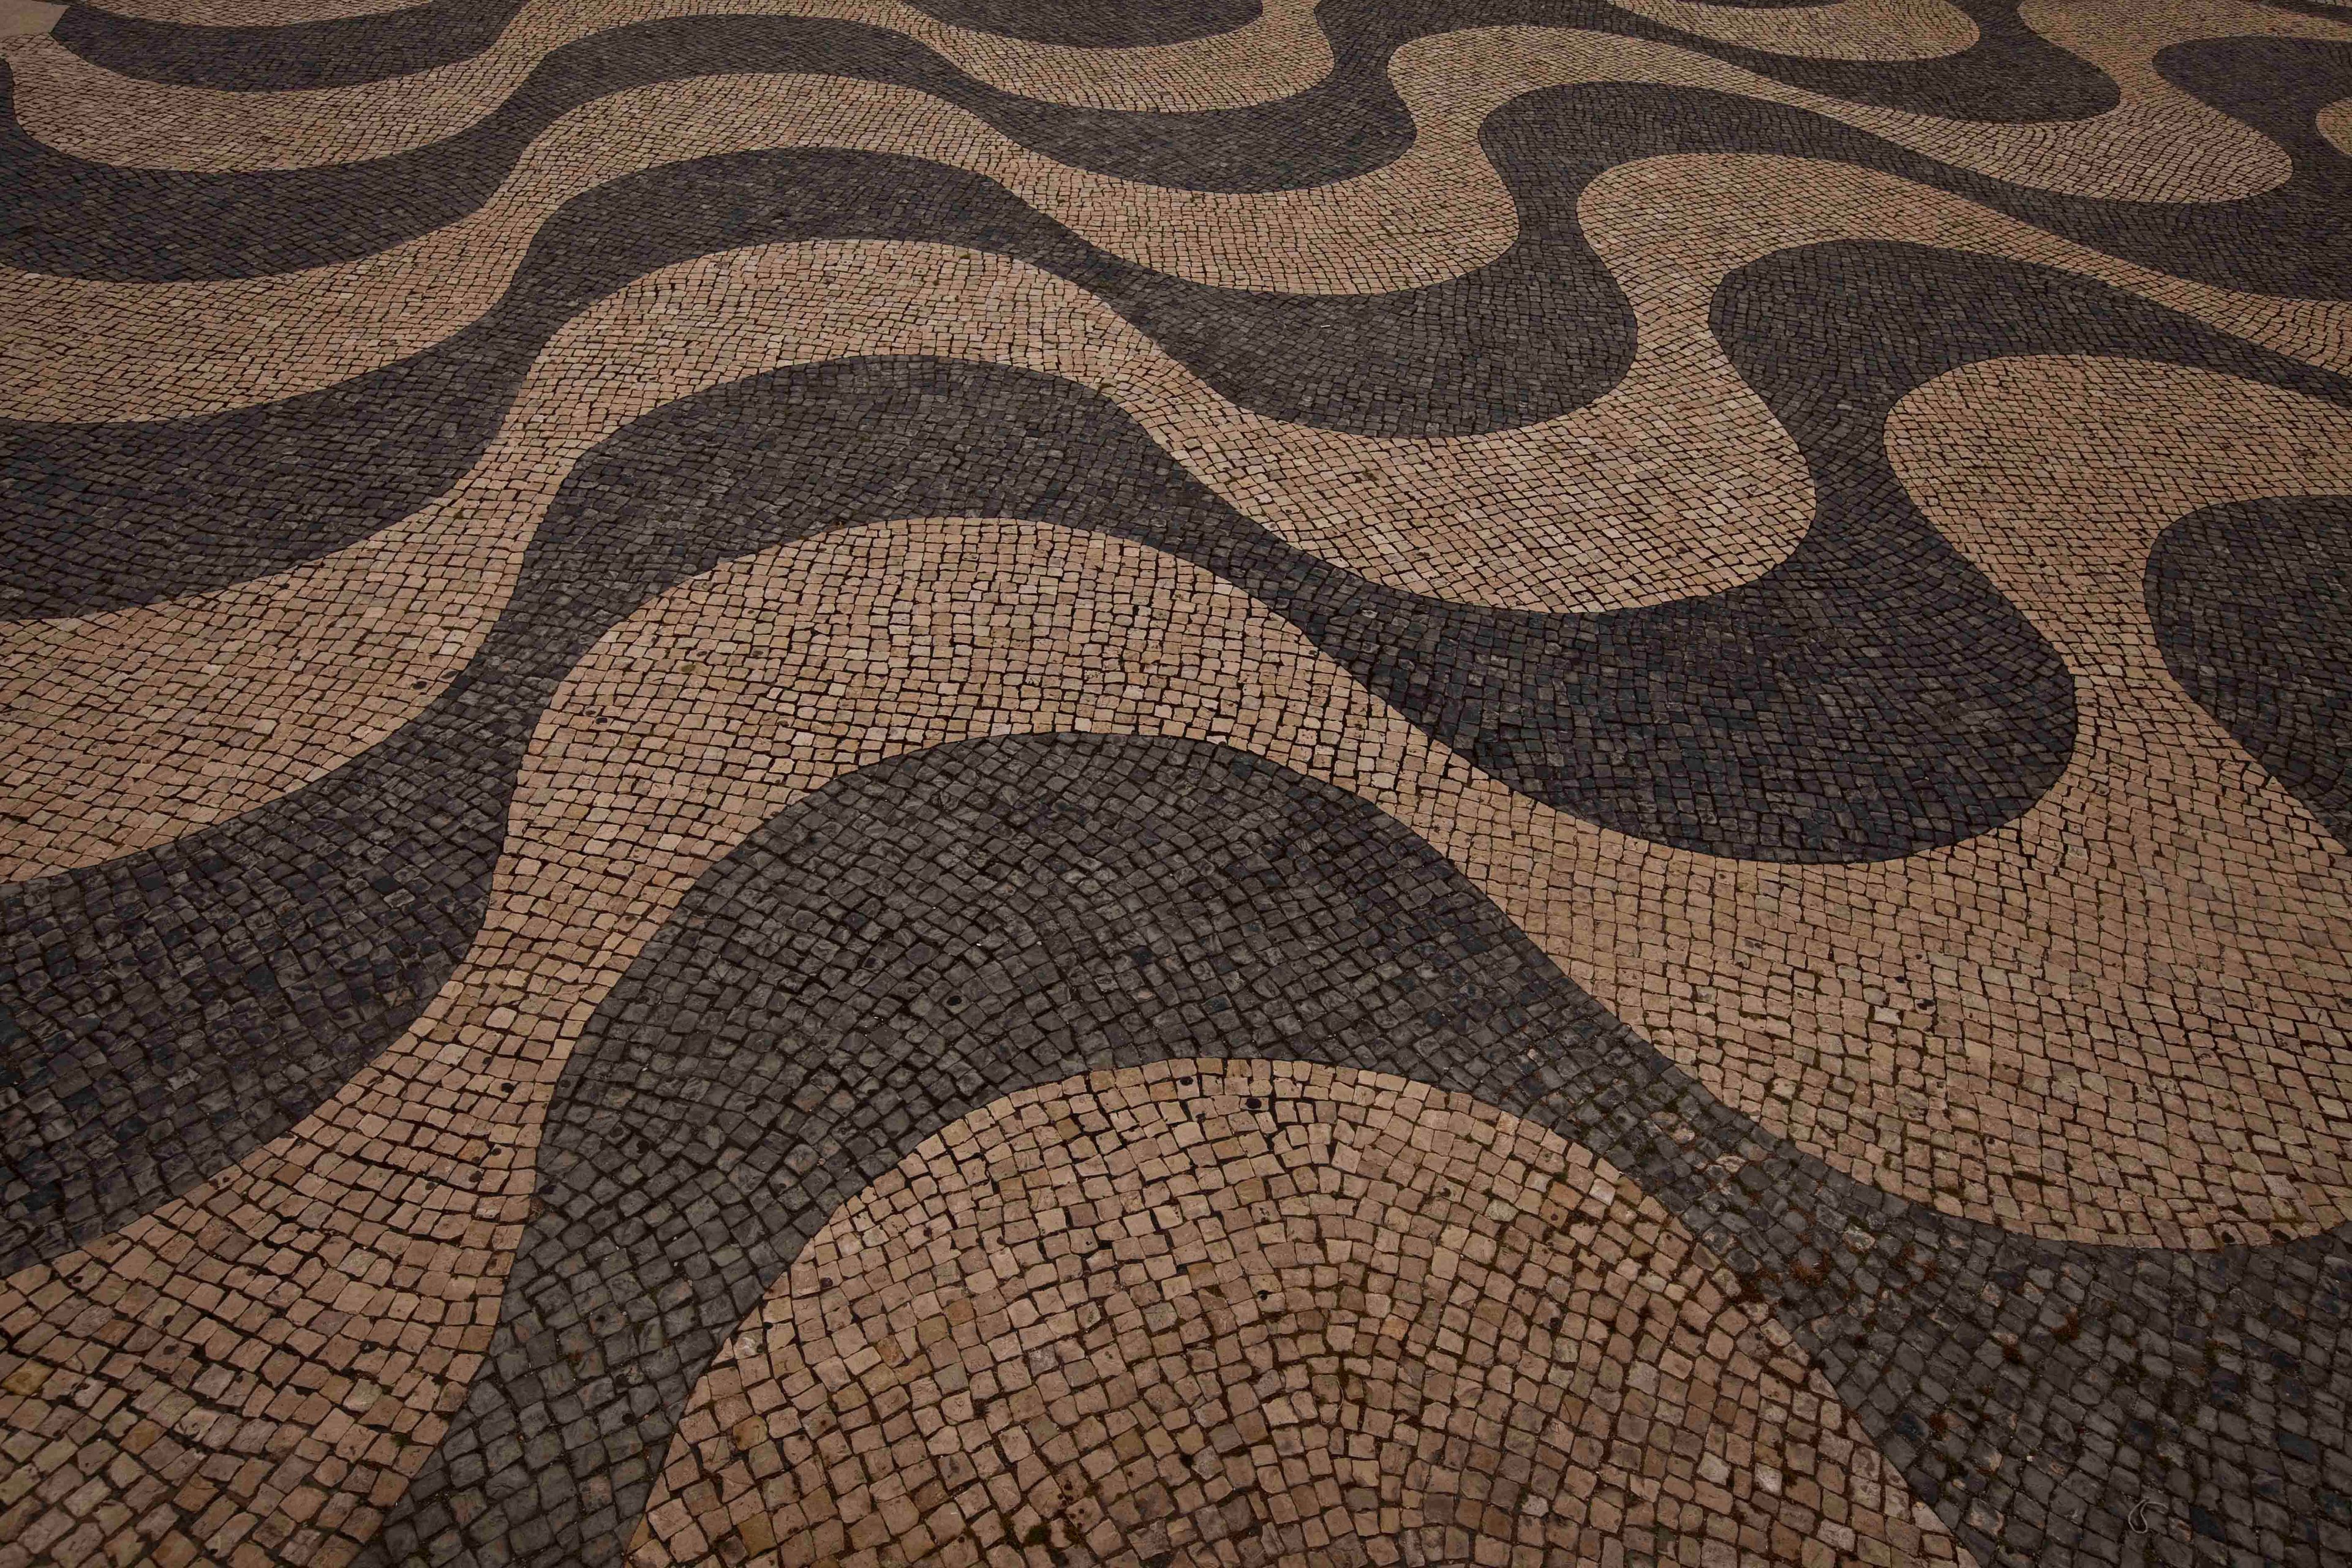 A black and tan wavy pavement pattern.